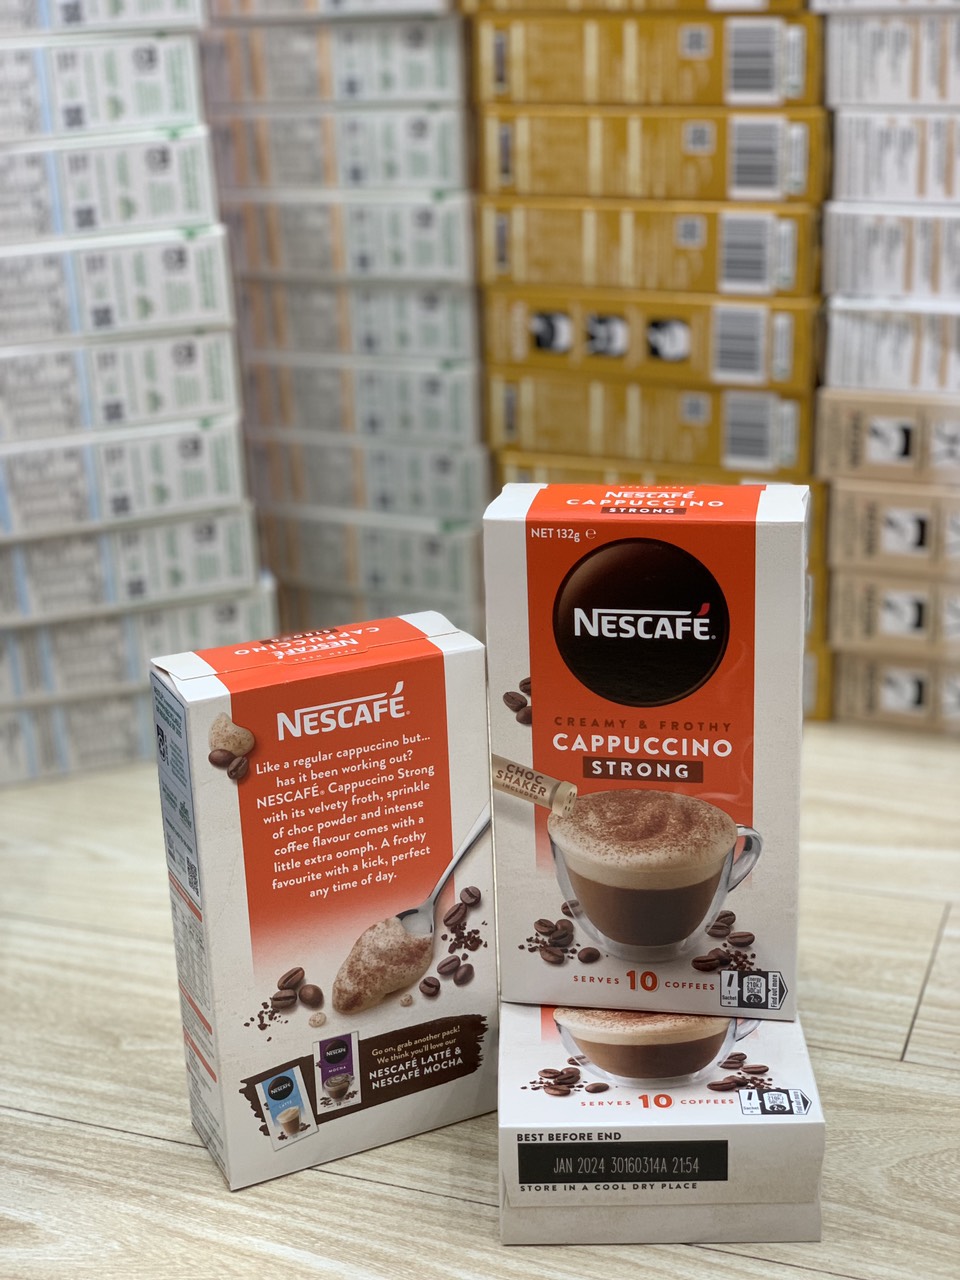 Nescafe Cappuccino Strong Úc Hộp 10 gói x 13.2g